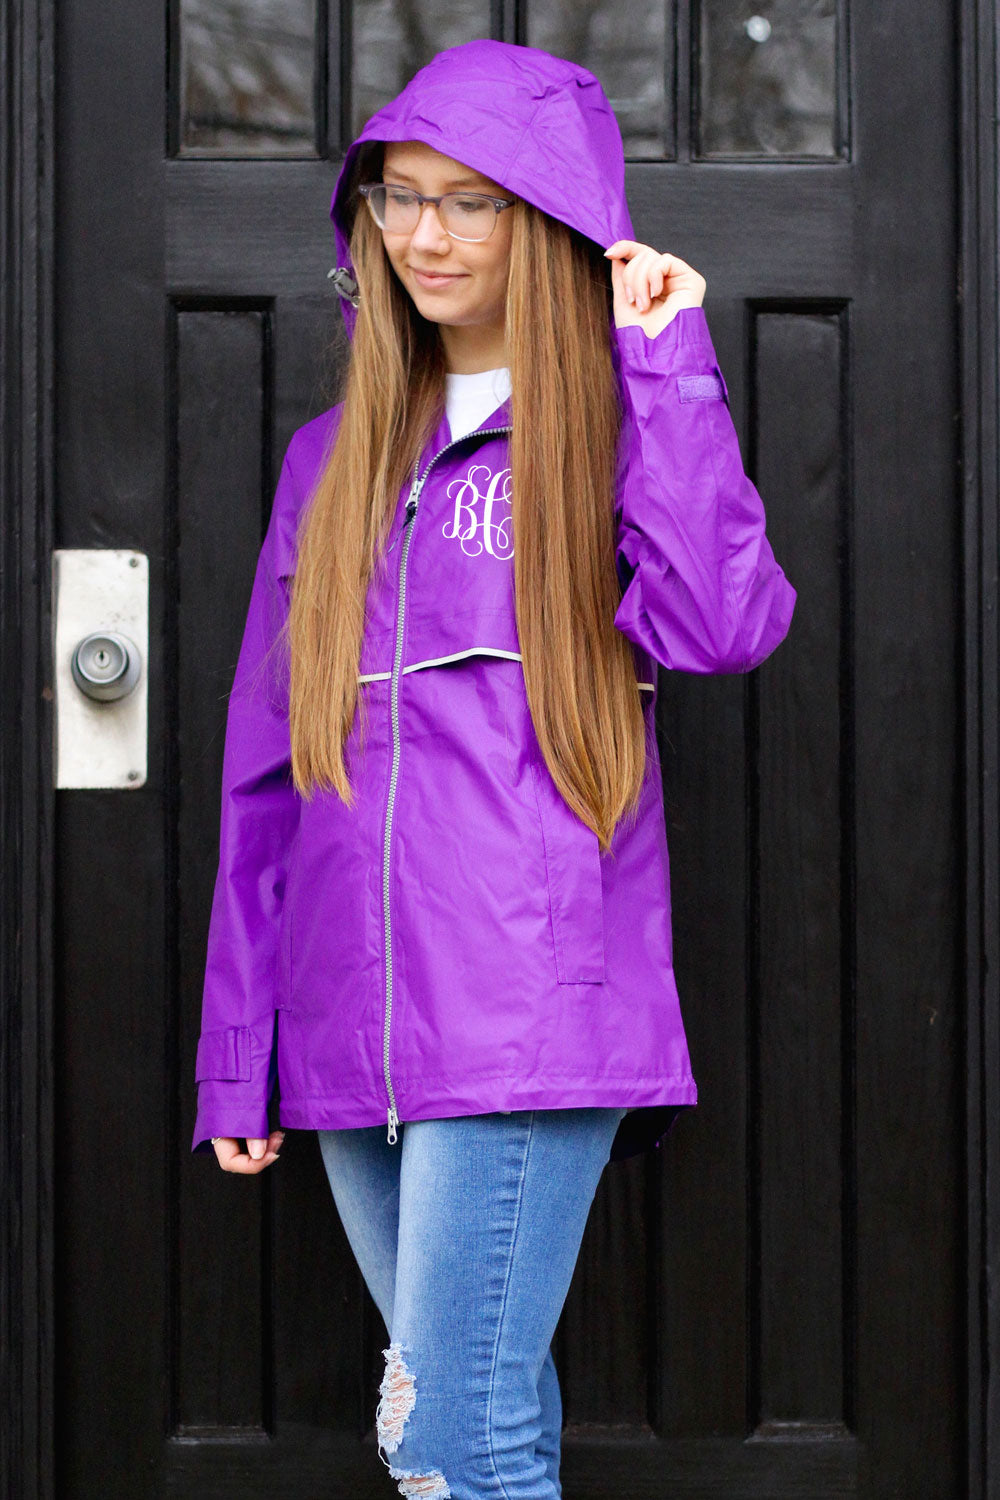 Monogrammed Purple Women's New Englander Rain Jacket